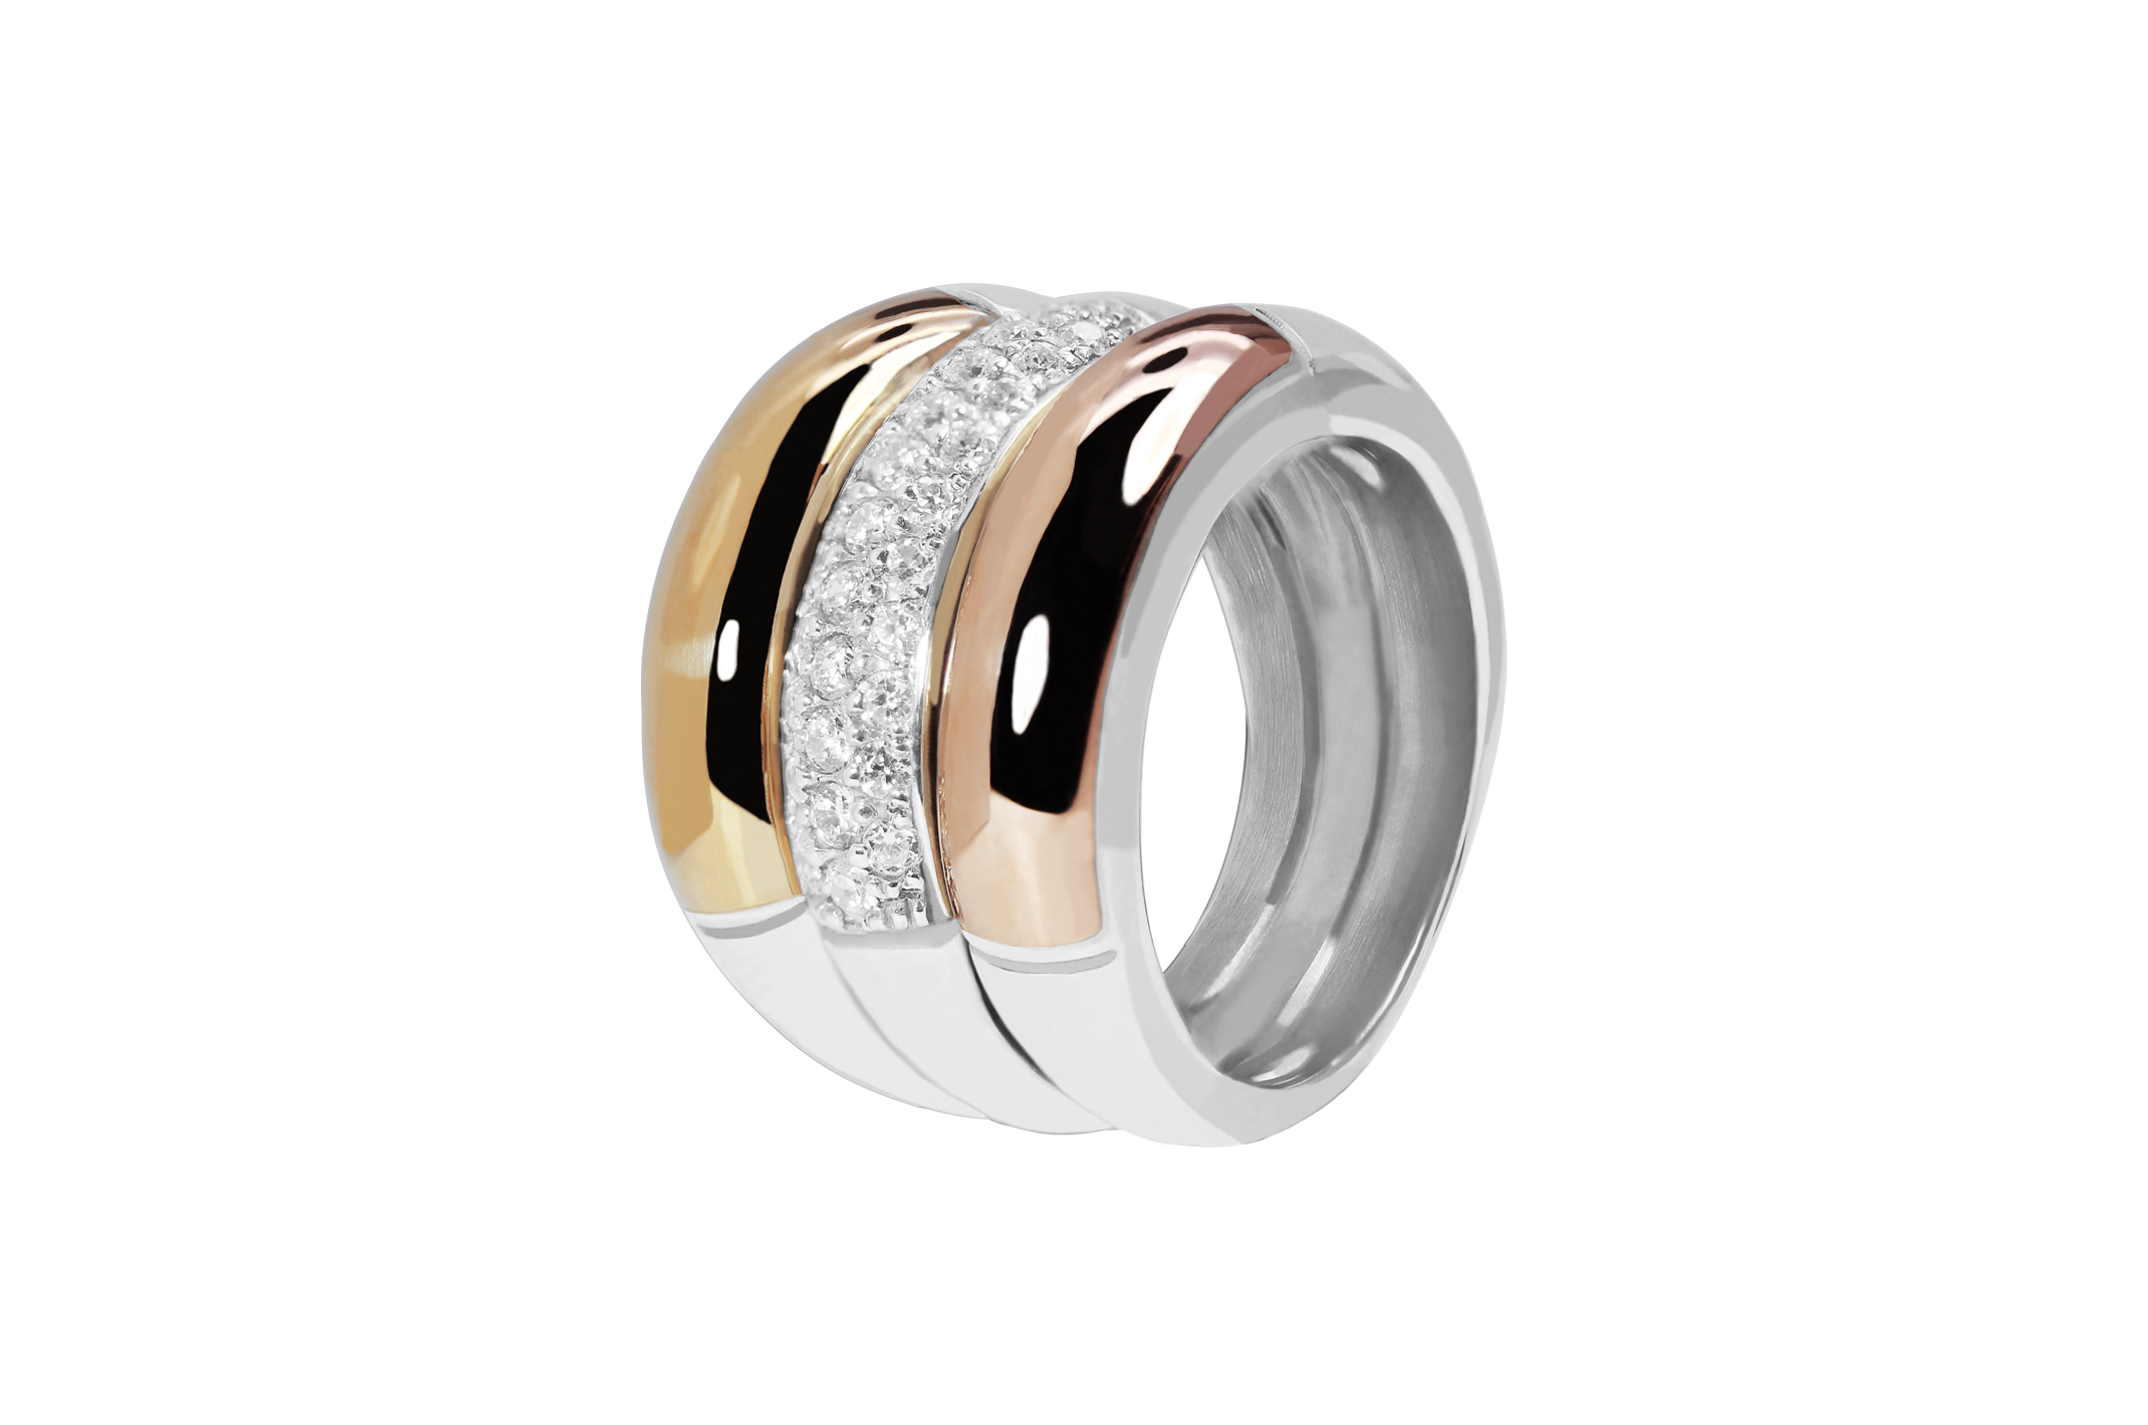 Joia: anel;Material: prata 925 e ouro 9 quilates;Peso: prata 12.5 gr e ouro 2.2 gr;Pedra: zirconia;Cor: bicolor;Medida: 10 (30);Género: mulher